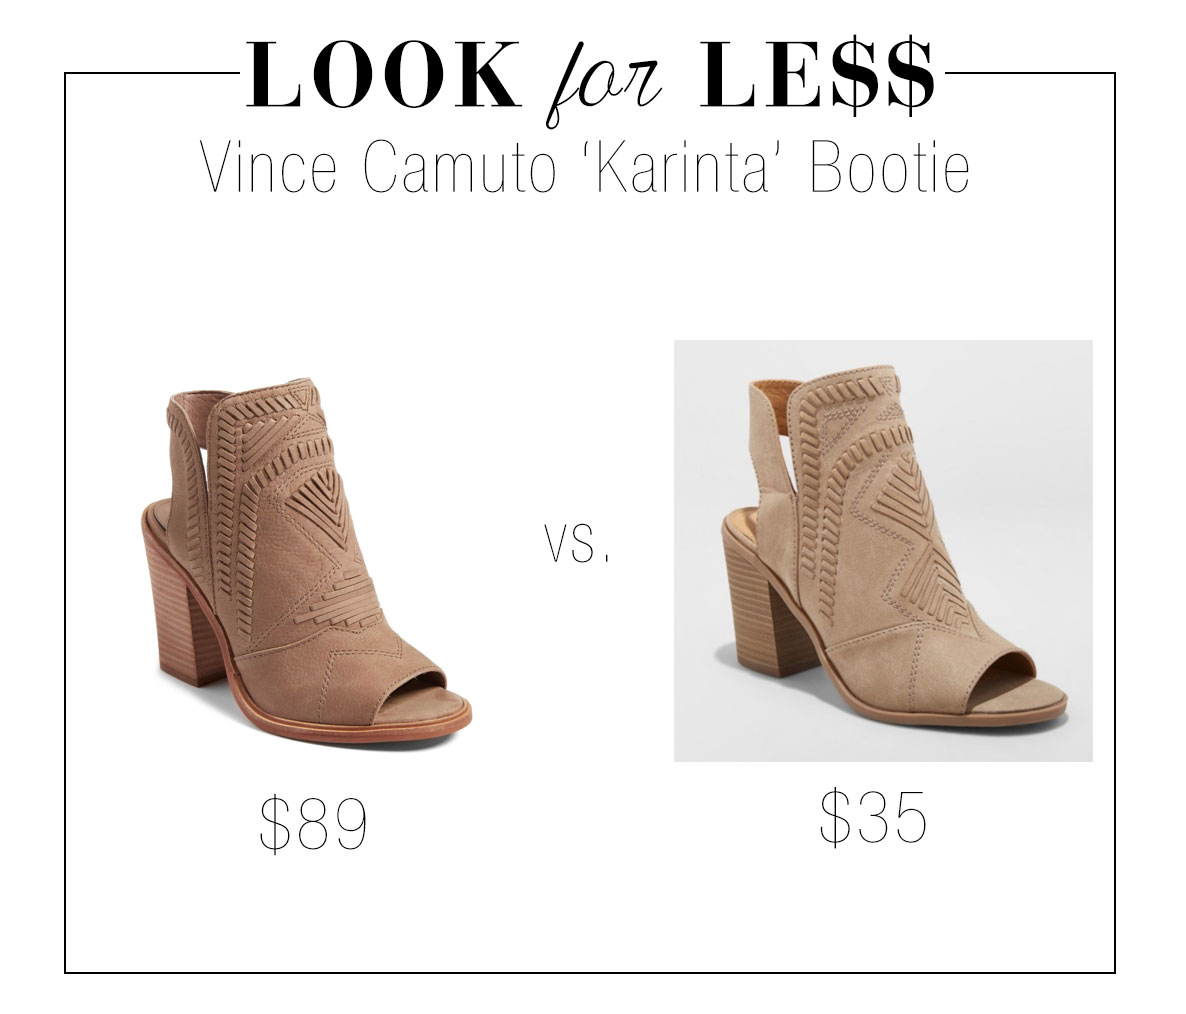 Vince Camuto 'Karinta' Block Heel Bootie look for less